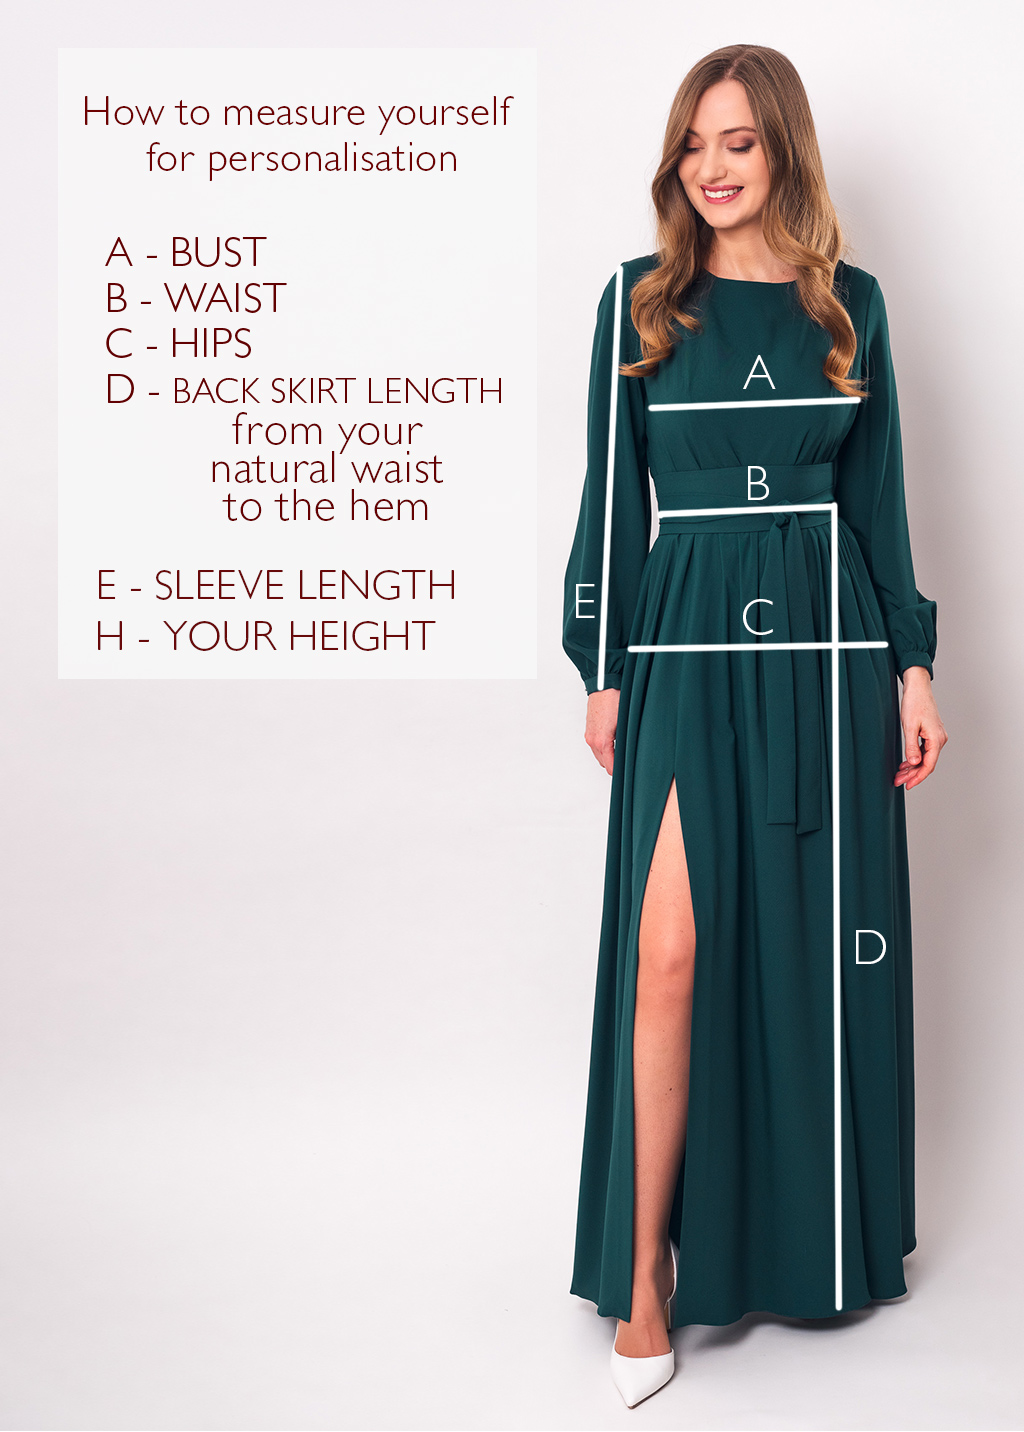 Burgundy slit dress with belt